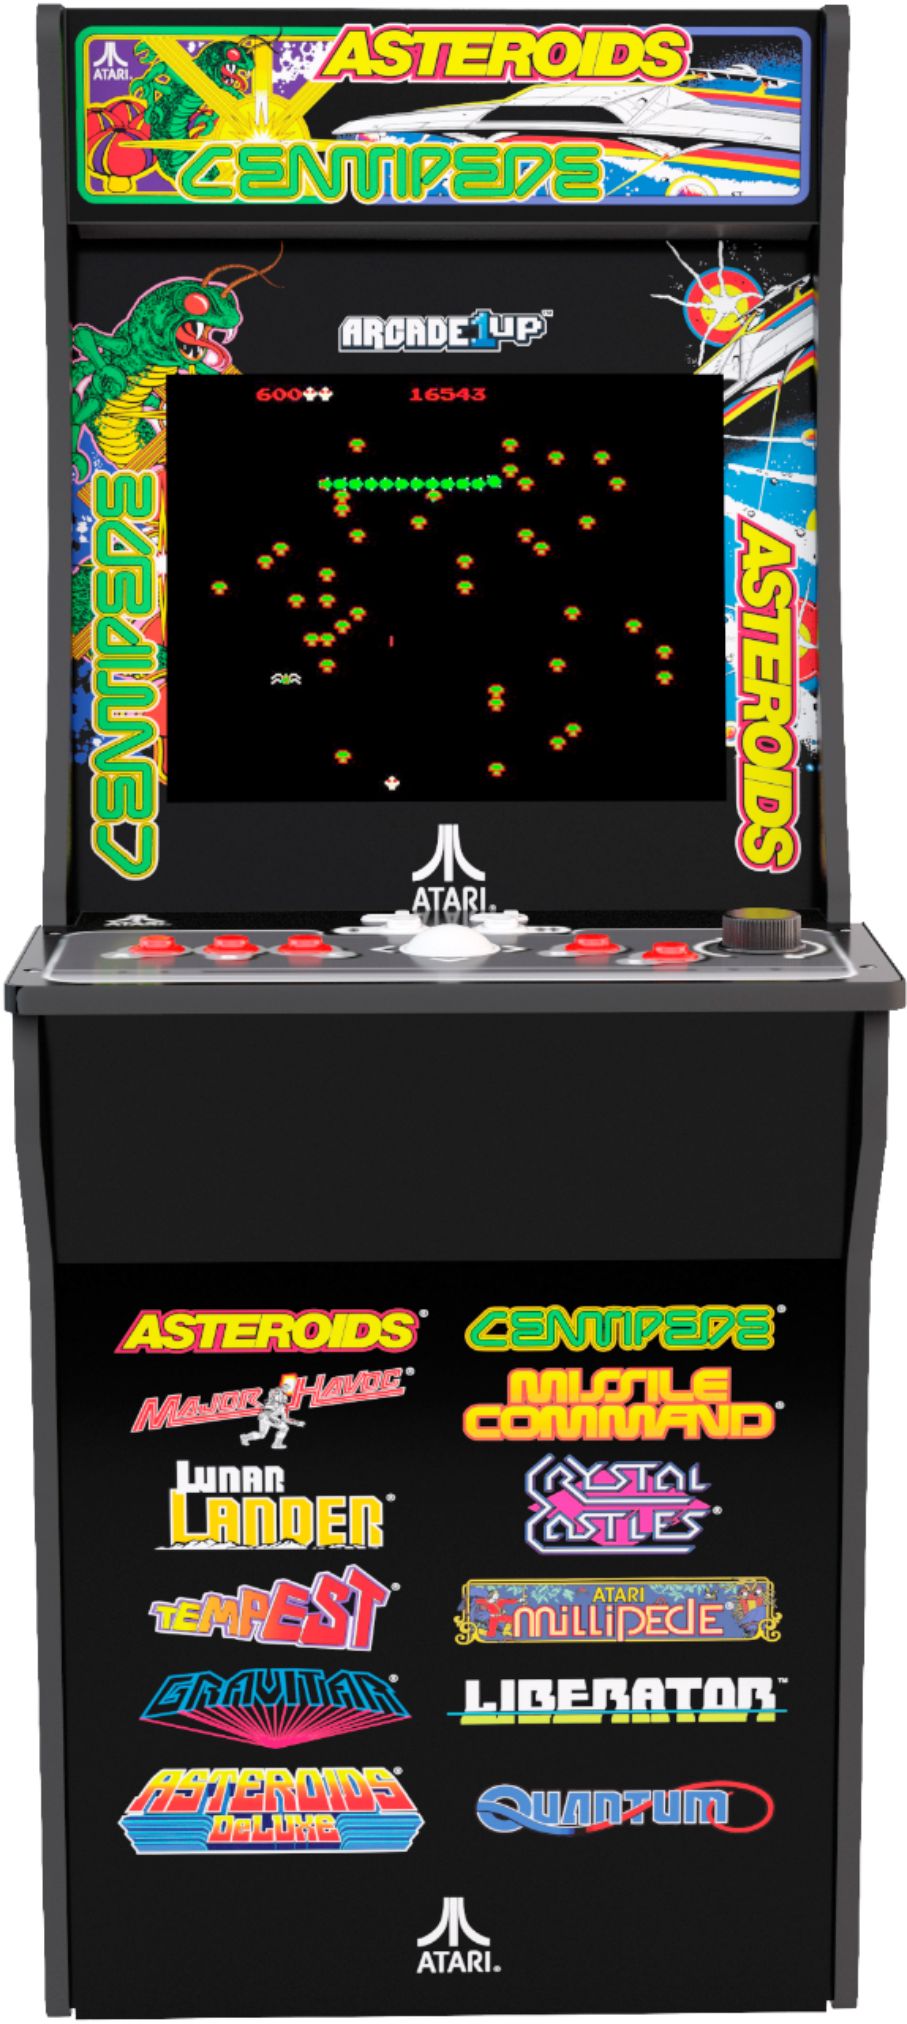 Screw Hole Caps/Covers Asteroids Arcade1up Centipede Atari Deluxe 